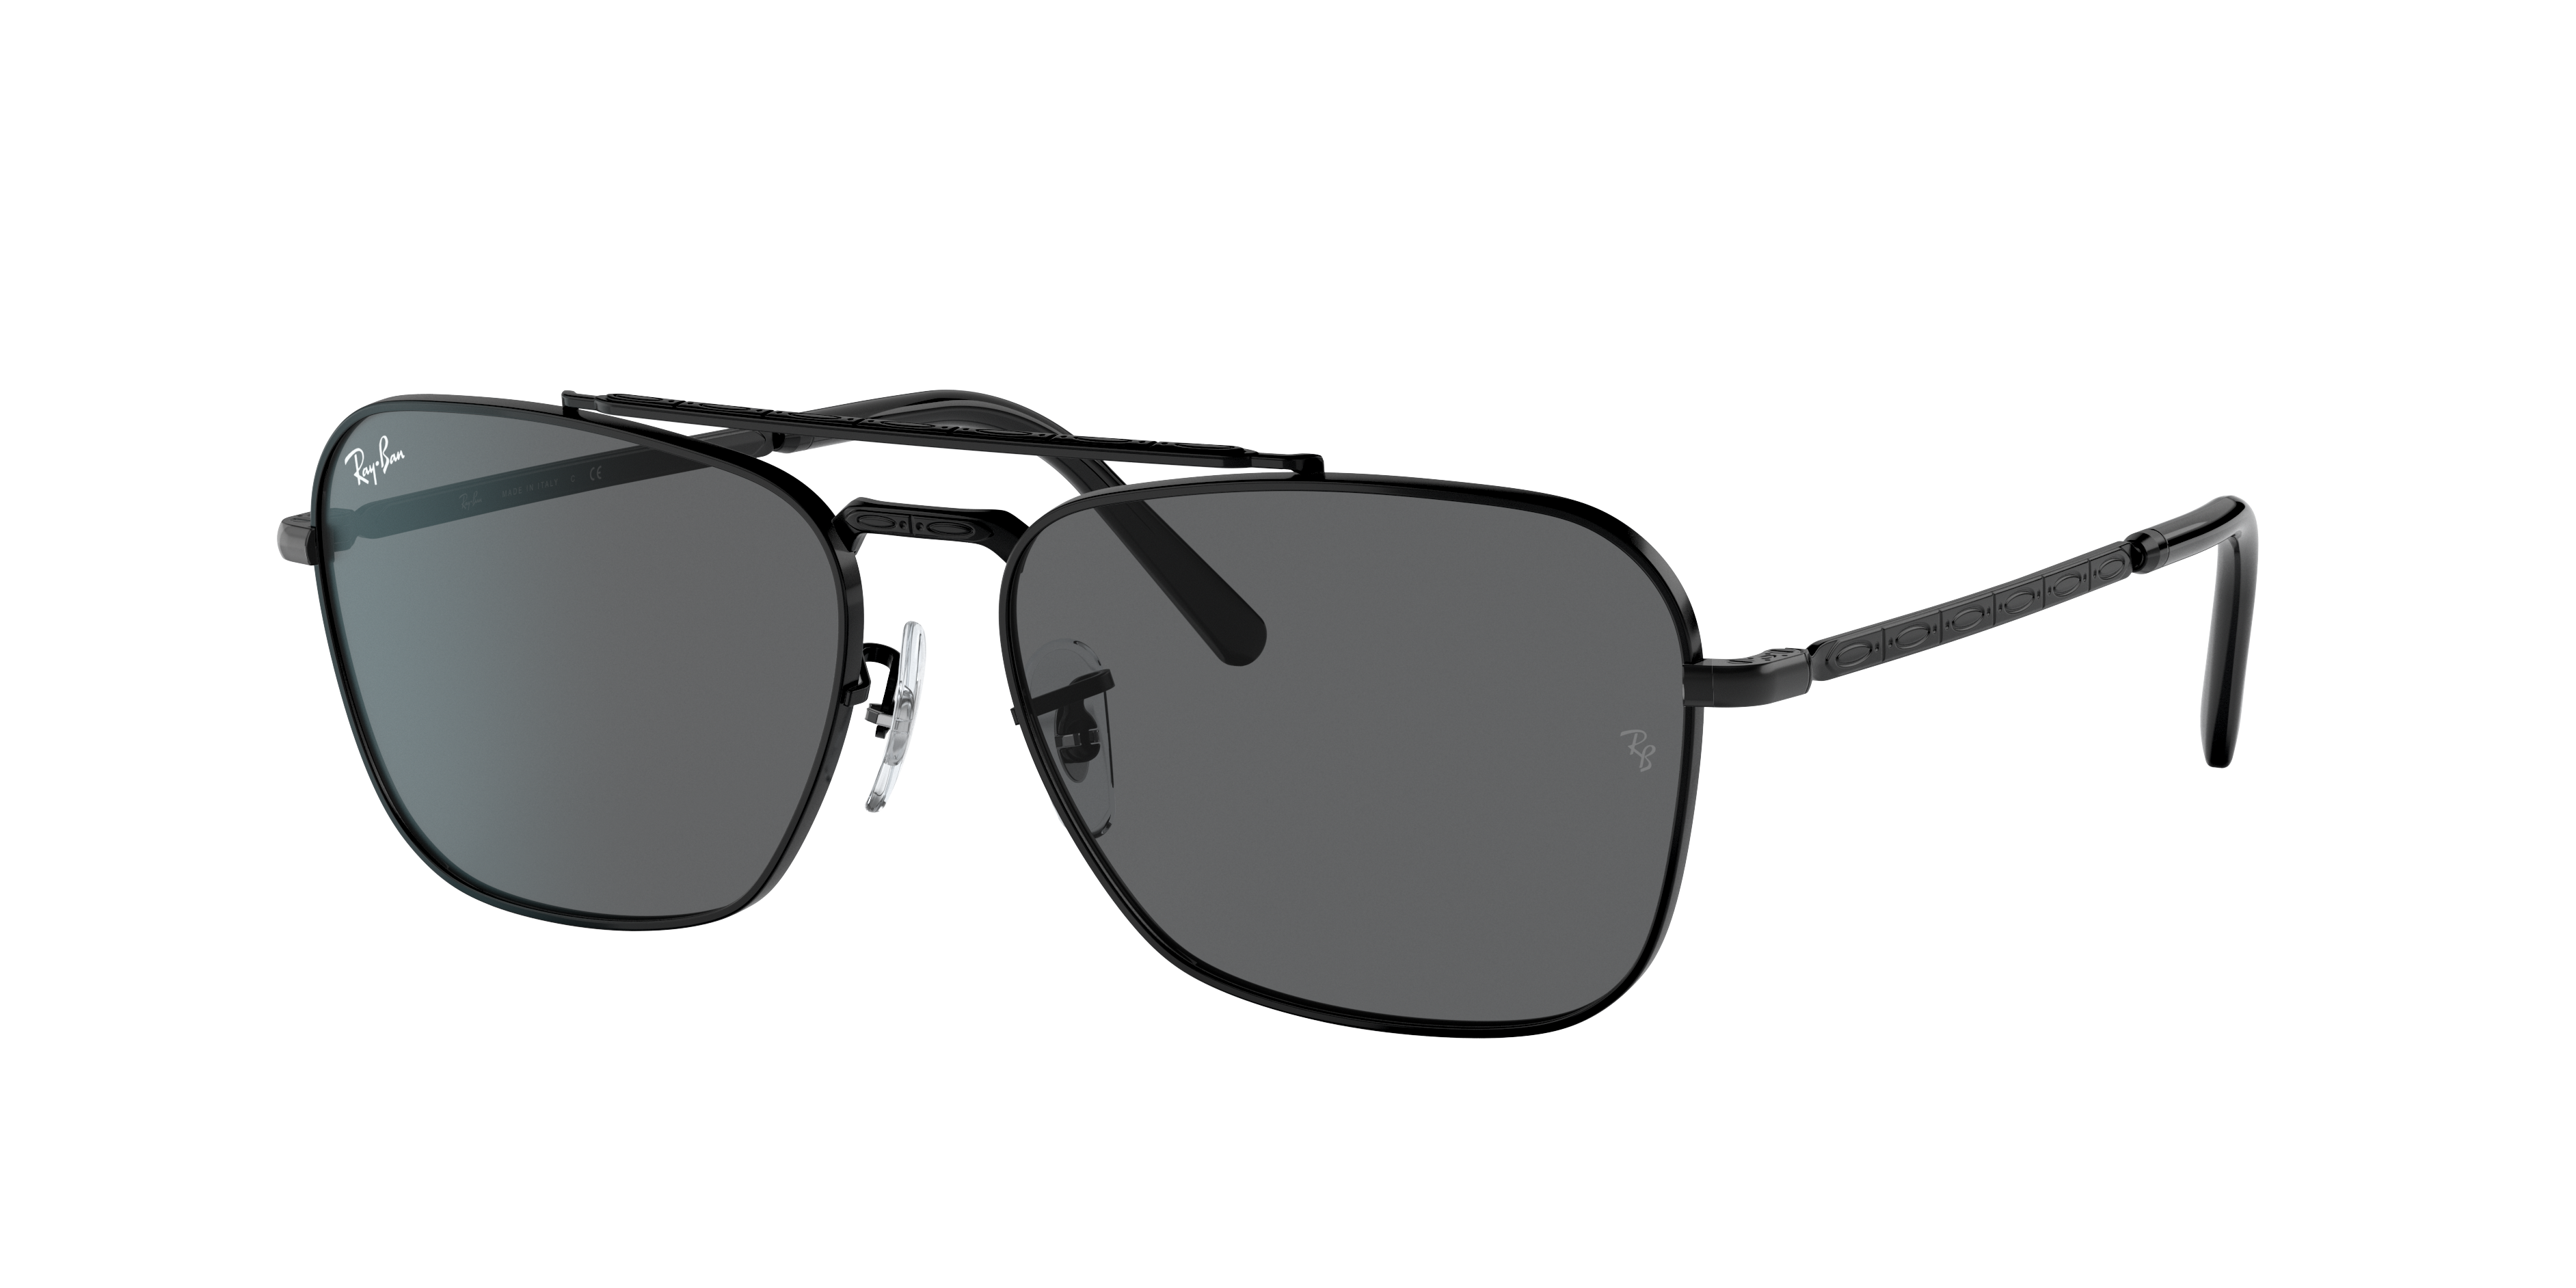 New Caravan Sunglasses in Black and Grey | Ray-Ban®